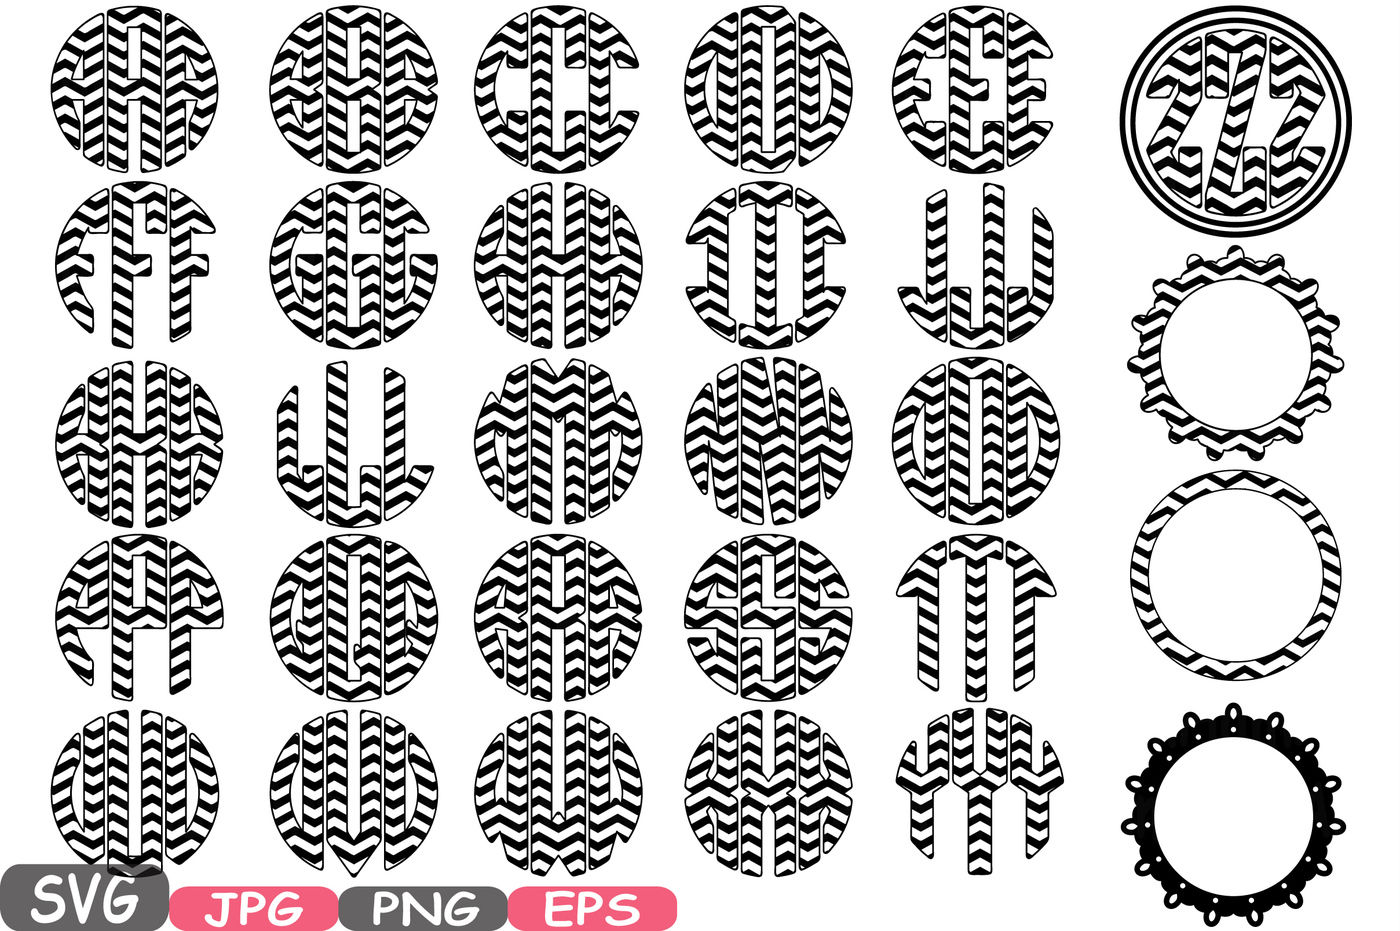 Stripes Circle Alphabet Svg Silhouette Letters Abc Cutting Files Sign Icons Cricut Design Cameo Vinyl Monogram Clipart 585s By Hamhamart Thehungryjpeg Com